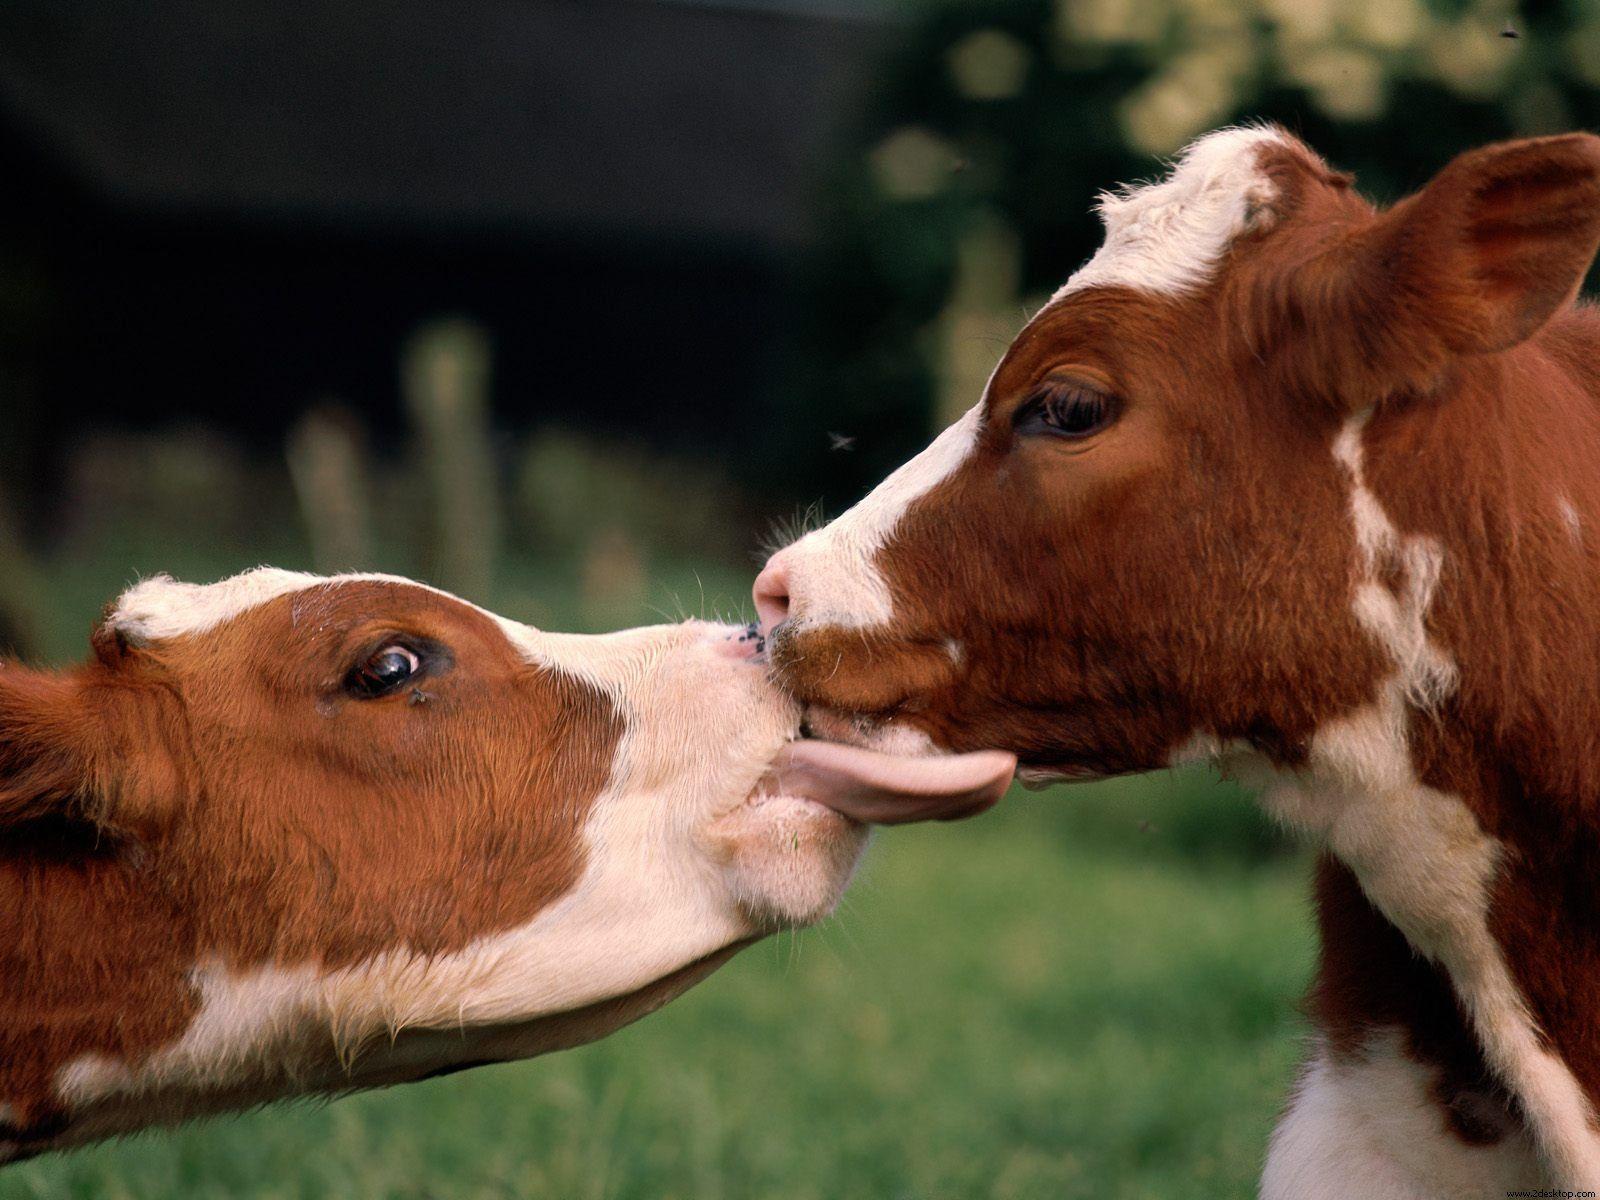 Wallpaper: Cows kissing HD Wallpaper 514 - Cow Animal HD Wallpaper. Cute animals kissing, Animals kissing, Animals beautiful